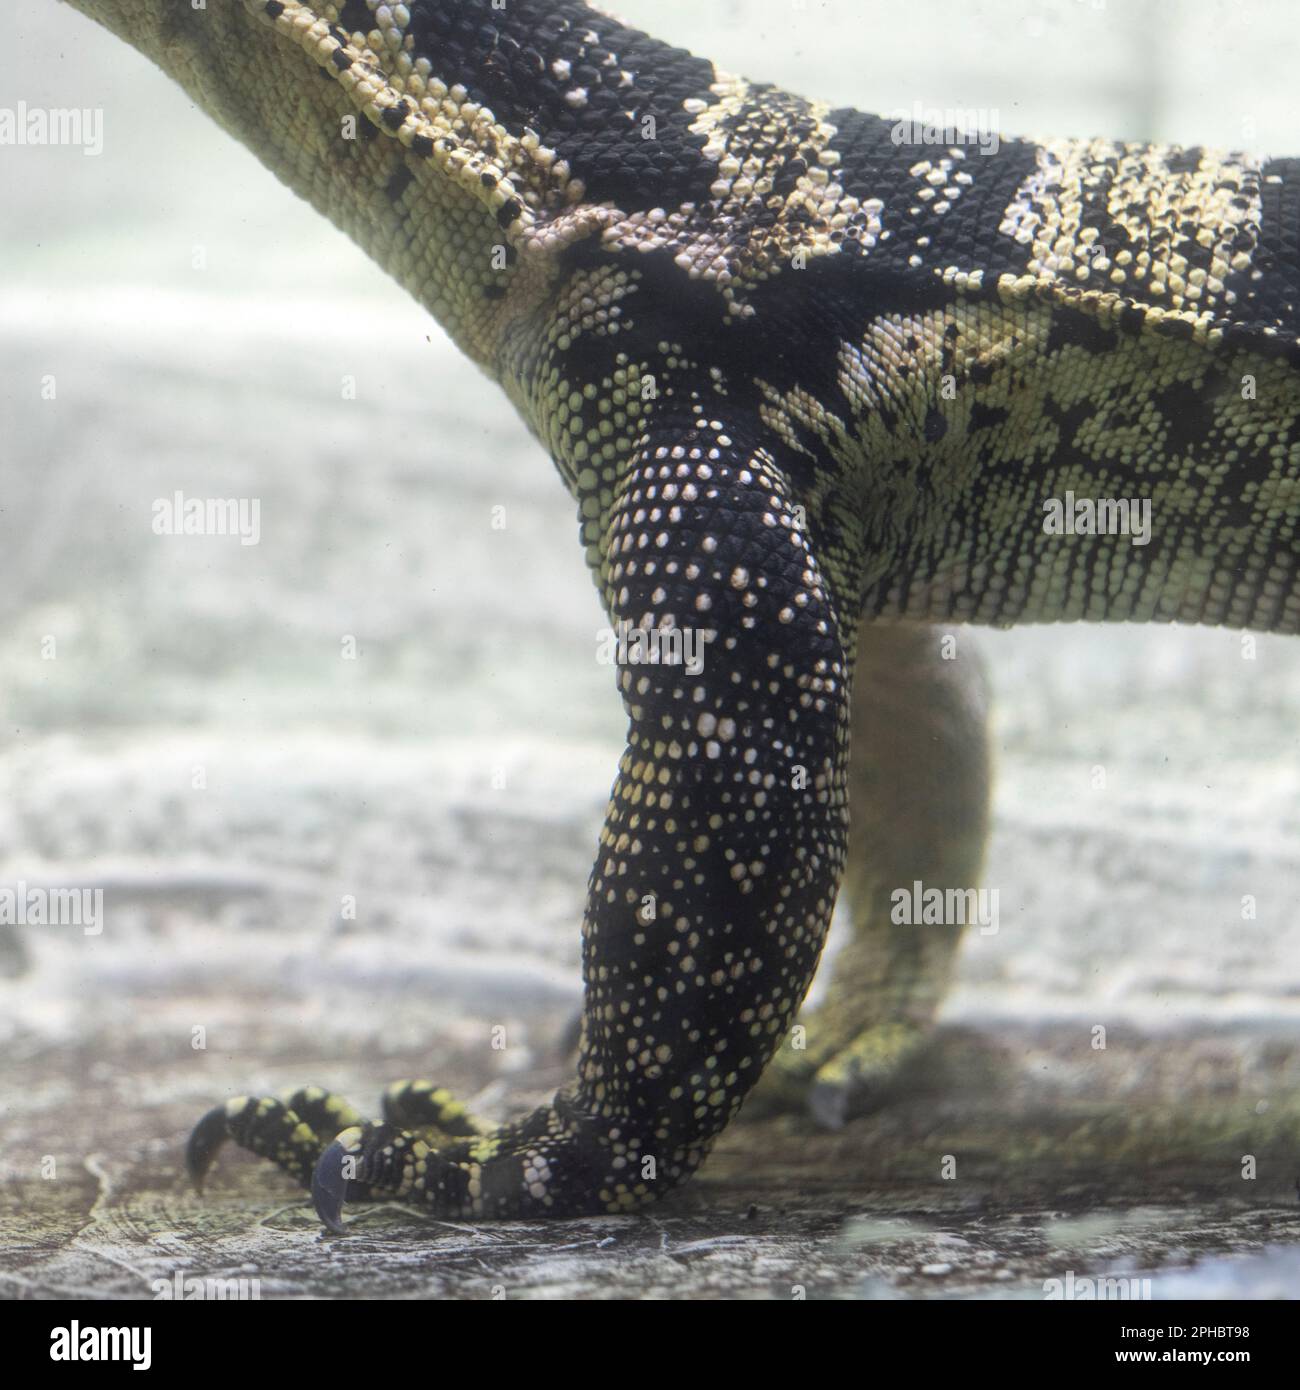 A textured crocodile skin lays underwater Stock Photo